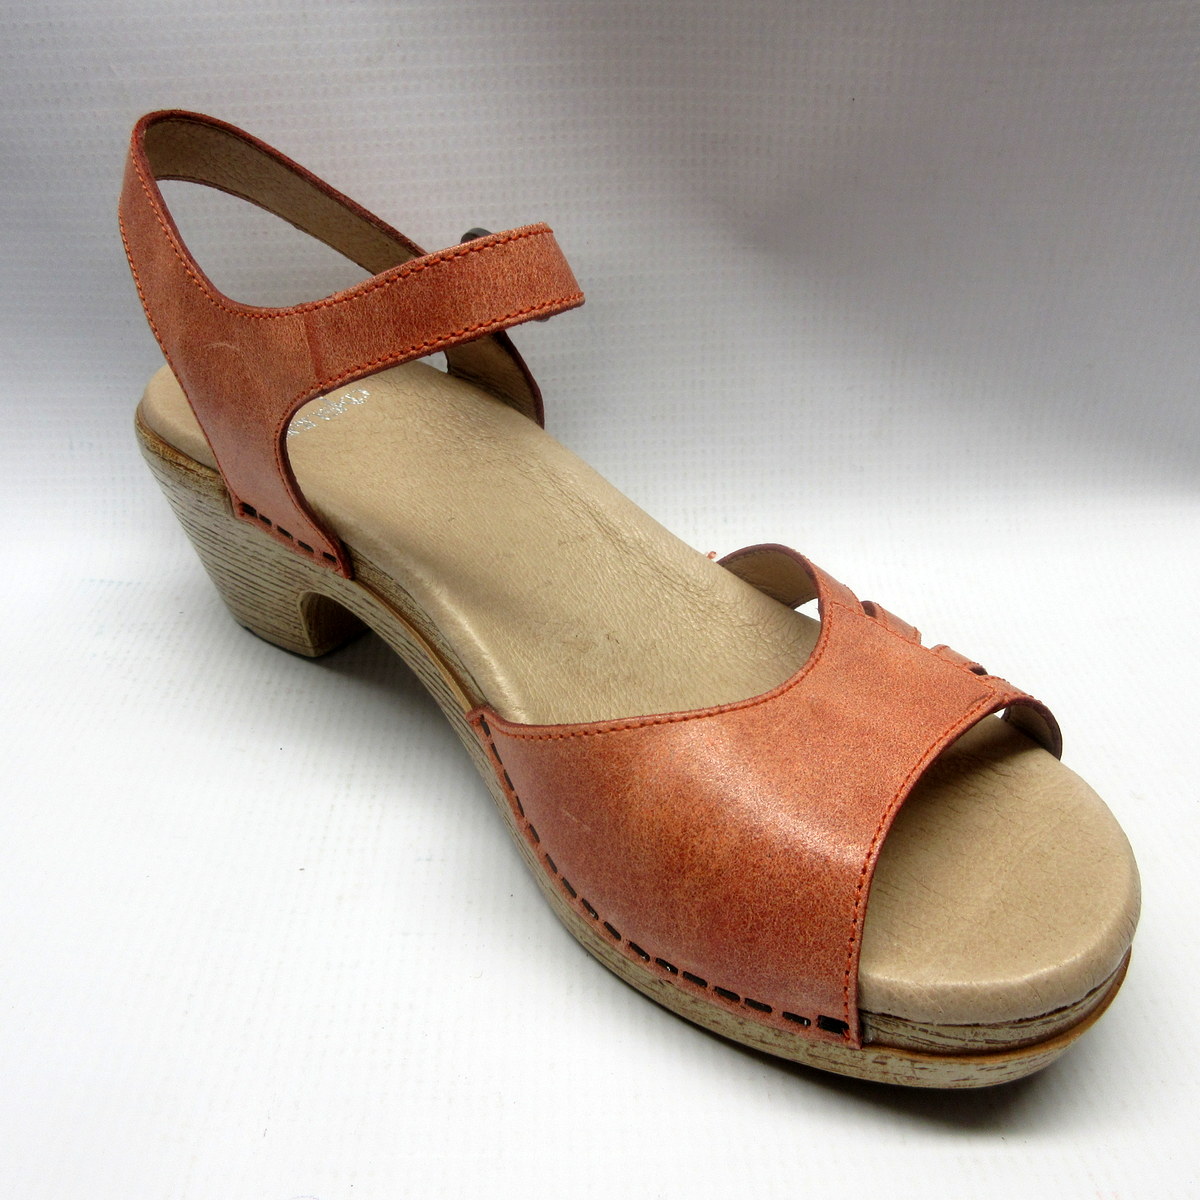 dansko women's sandals